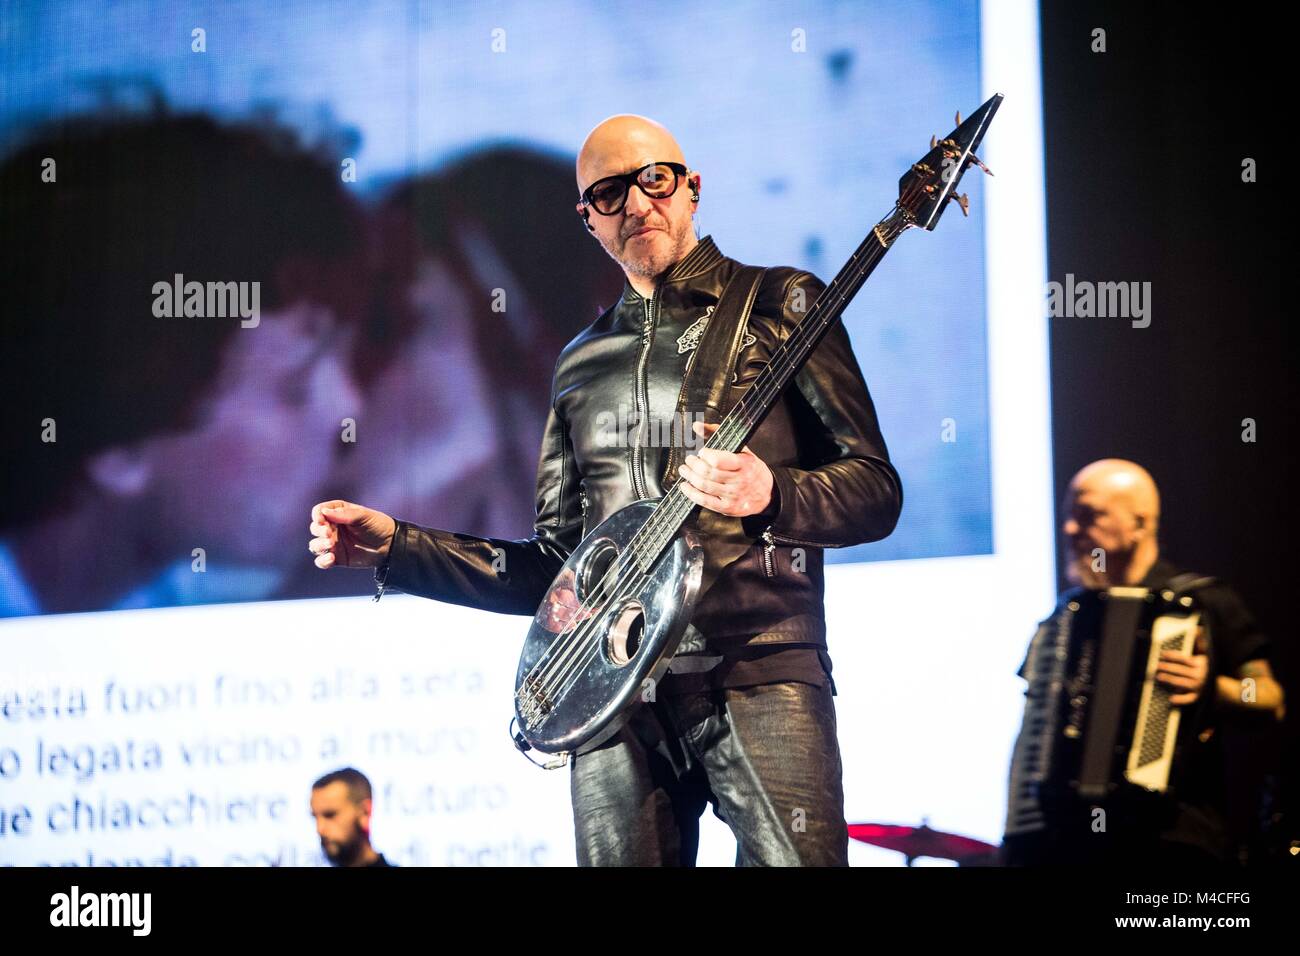 Assago Milan 15th february 2018 Saturnino Celani playing bass during a concert of Lorenzo Jovanotti Cherubini live at Mediolanum Forum © Roberto Finizio / Alamy Live News Stock Photo